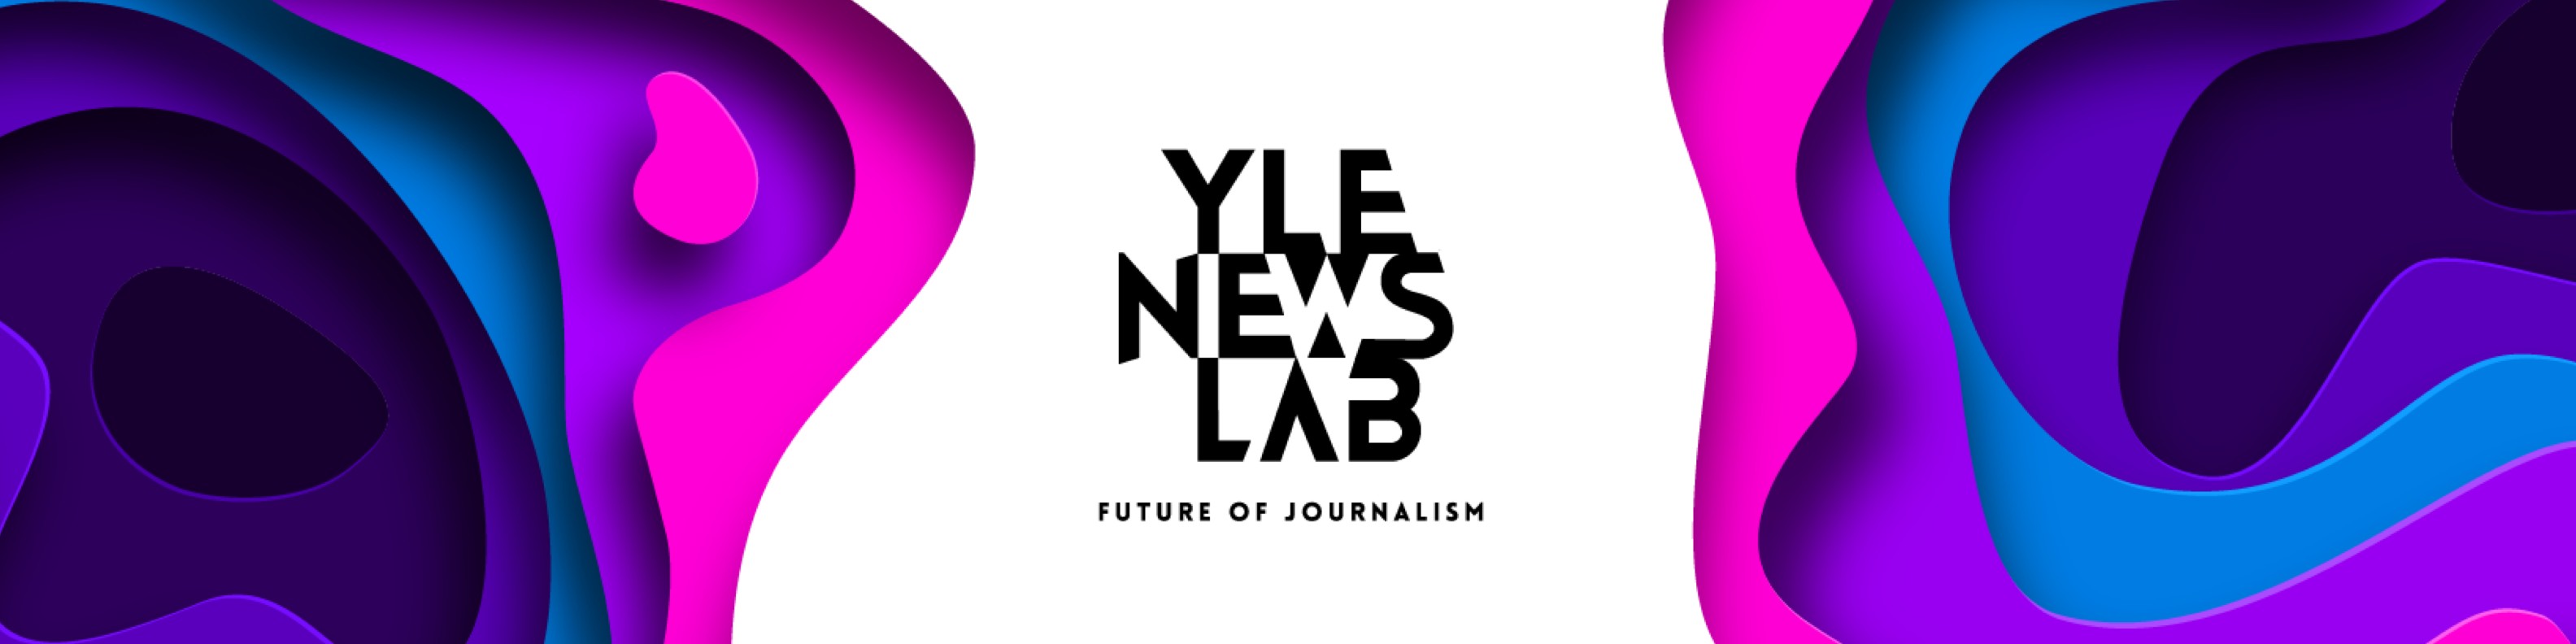 Yle News Lab Linkedin